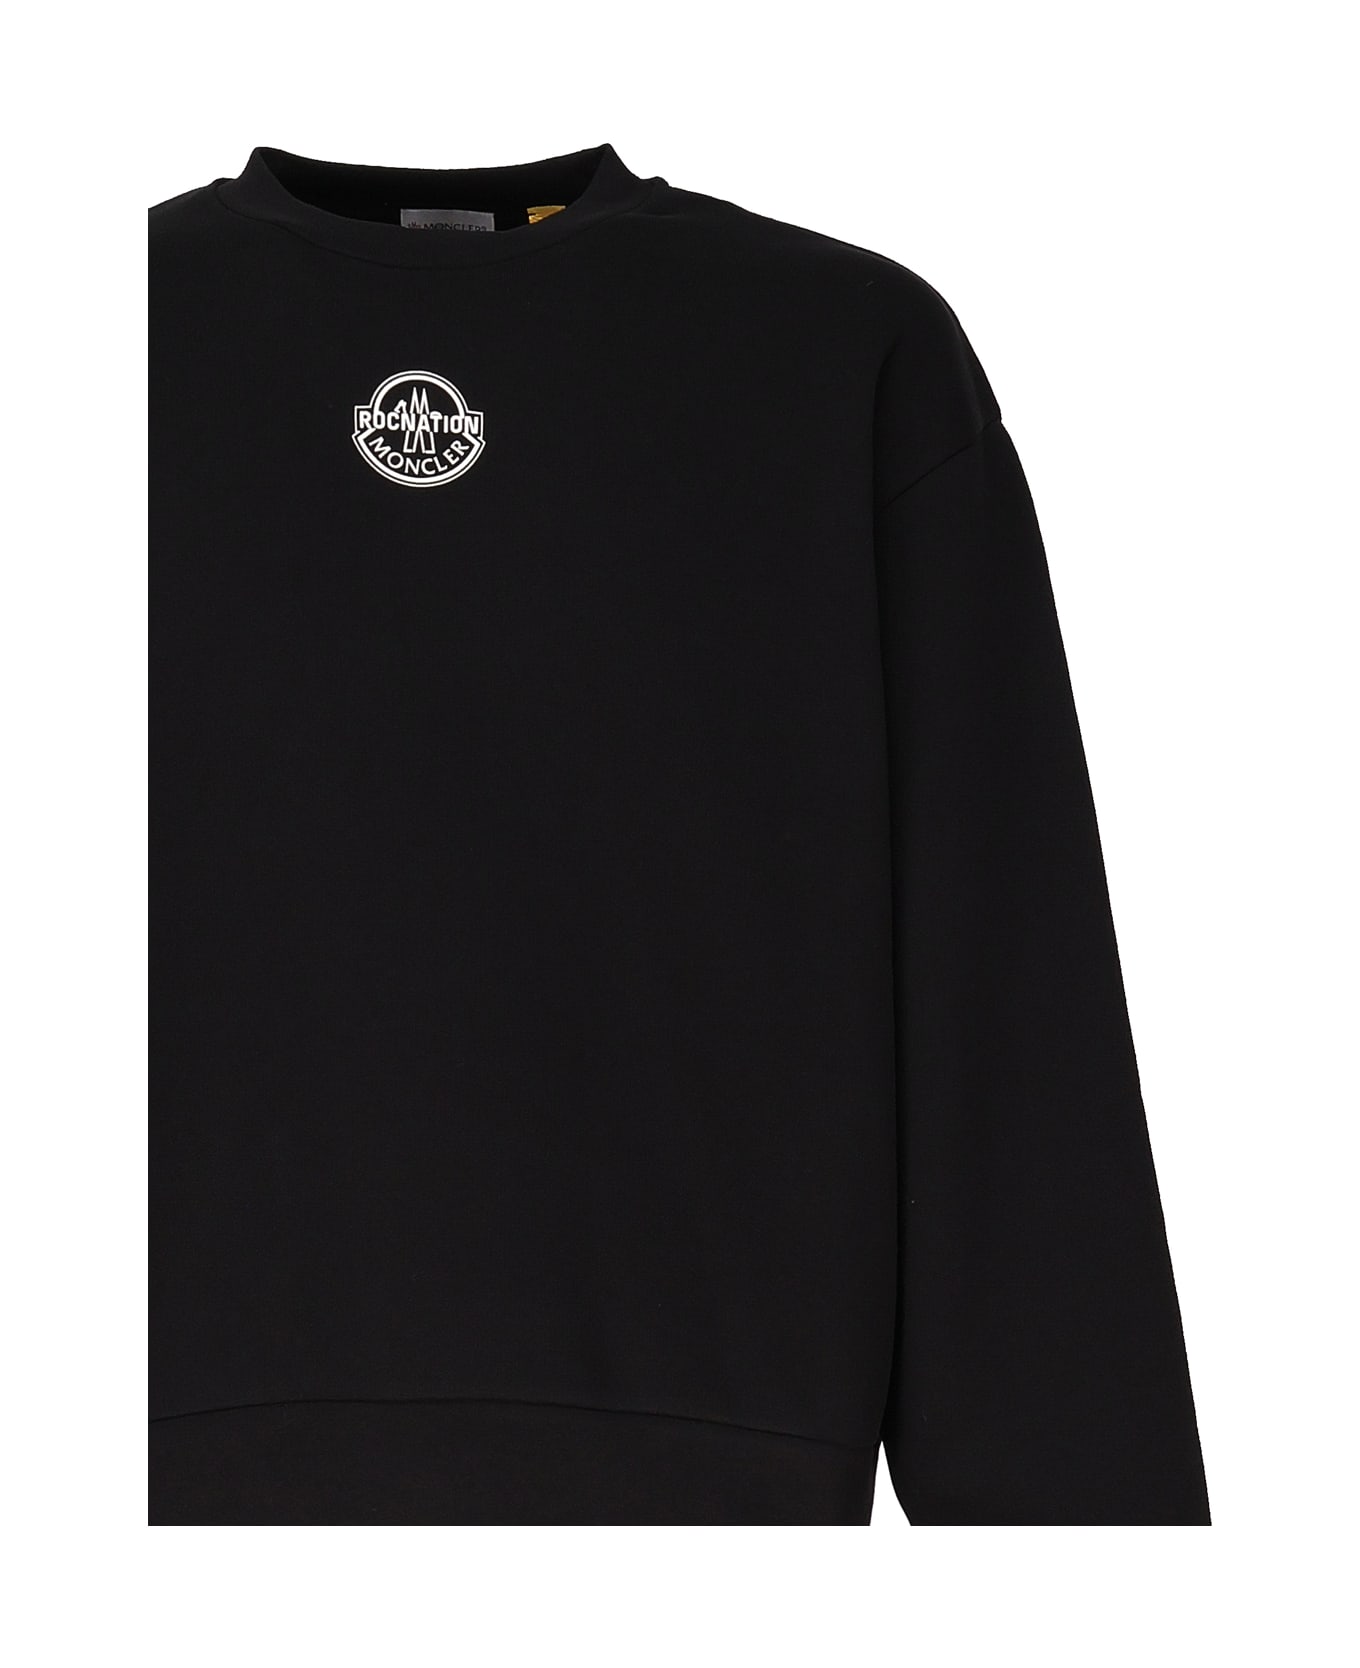 Moncler Genius Logoed Sweatshirt - Black